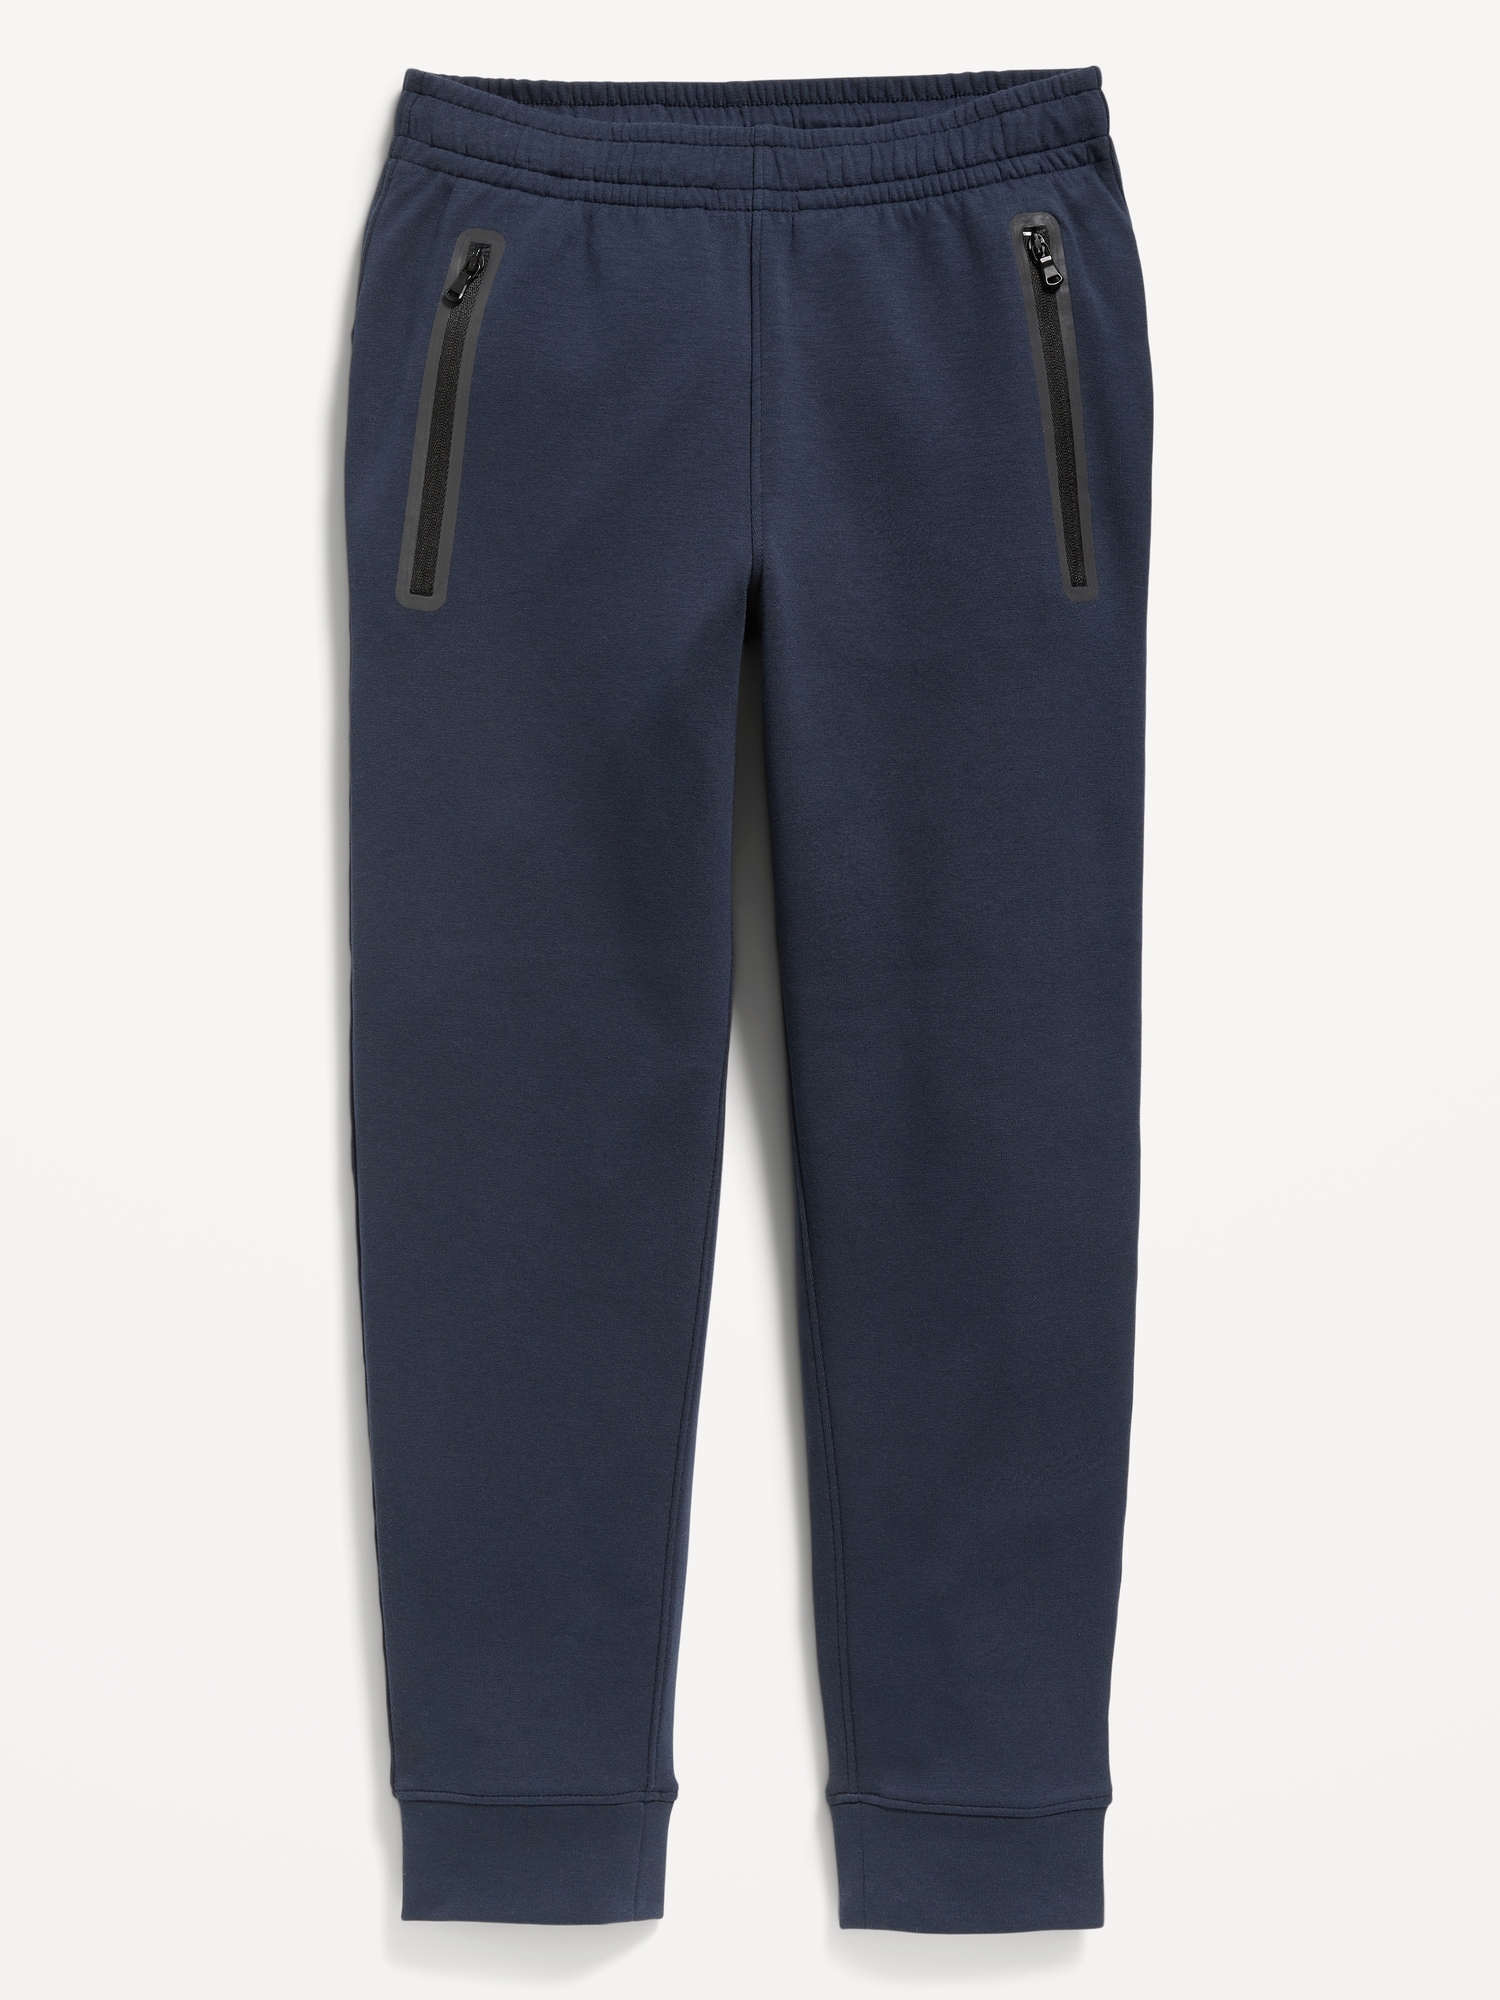 Old Navy Dynamic Fleece Jogger Sweatpants For Boys Mesa Rock Size 8 (M)